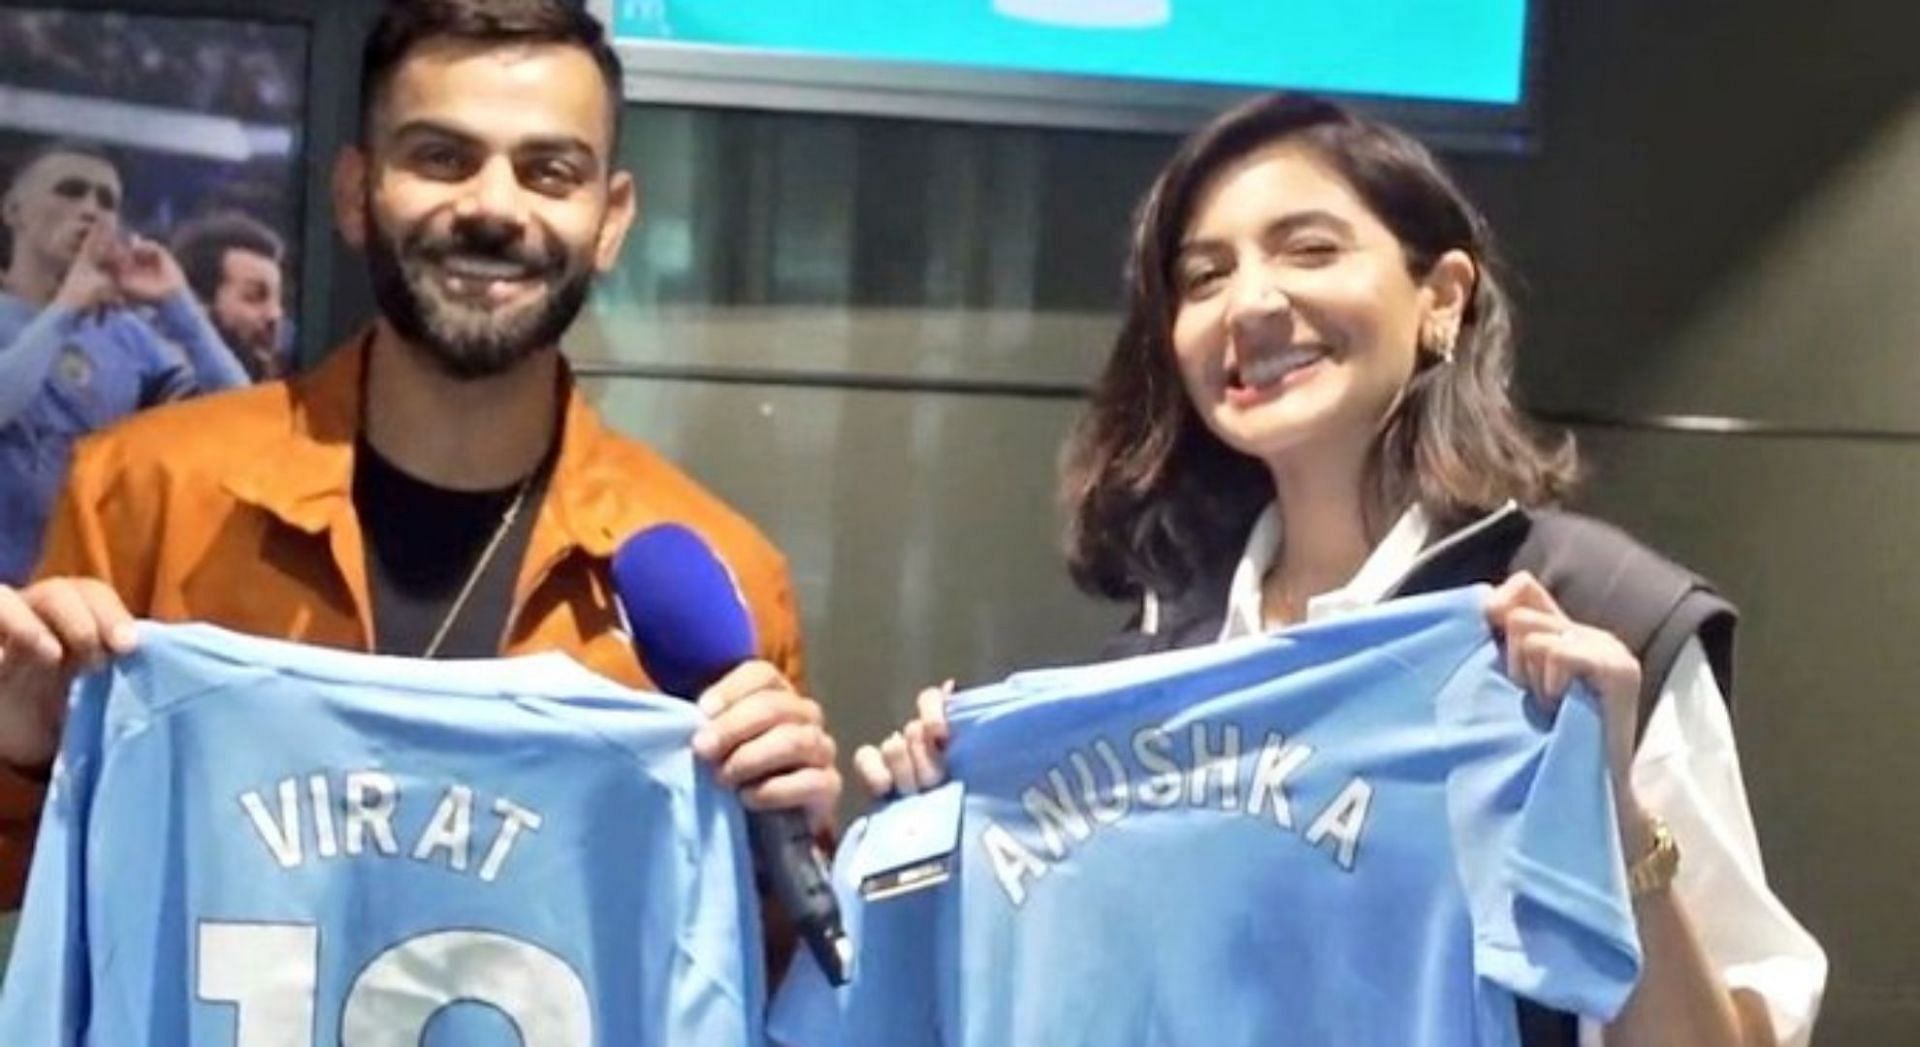 [Watch] Manchester City gifts customized jerseys to Virat Kohli and Anushka Sharma after winning FA Cup final